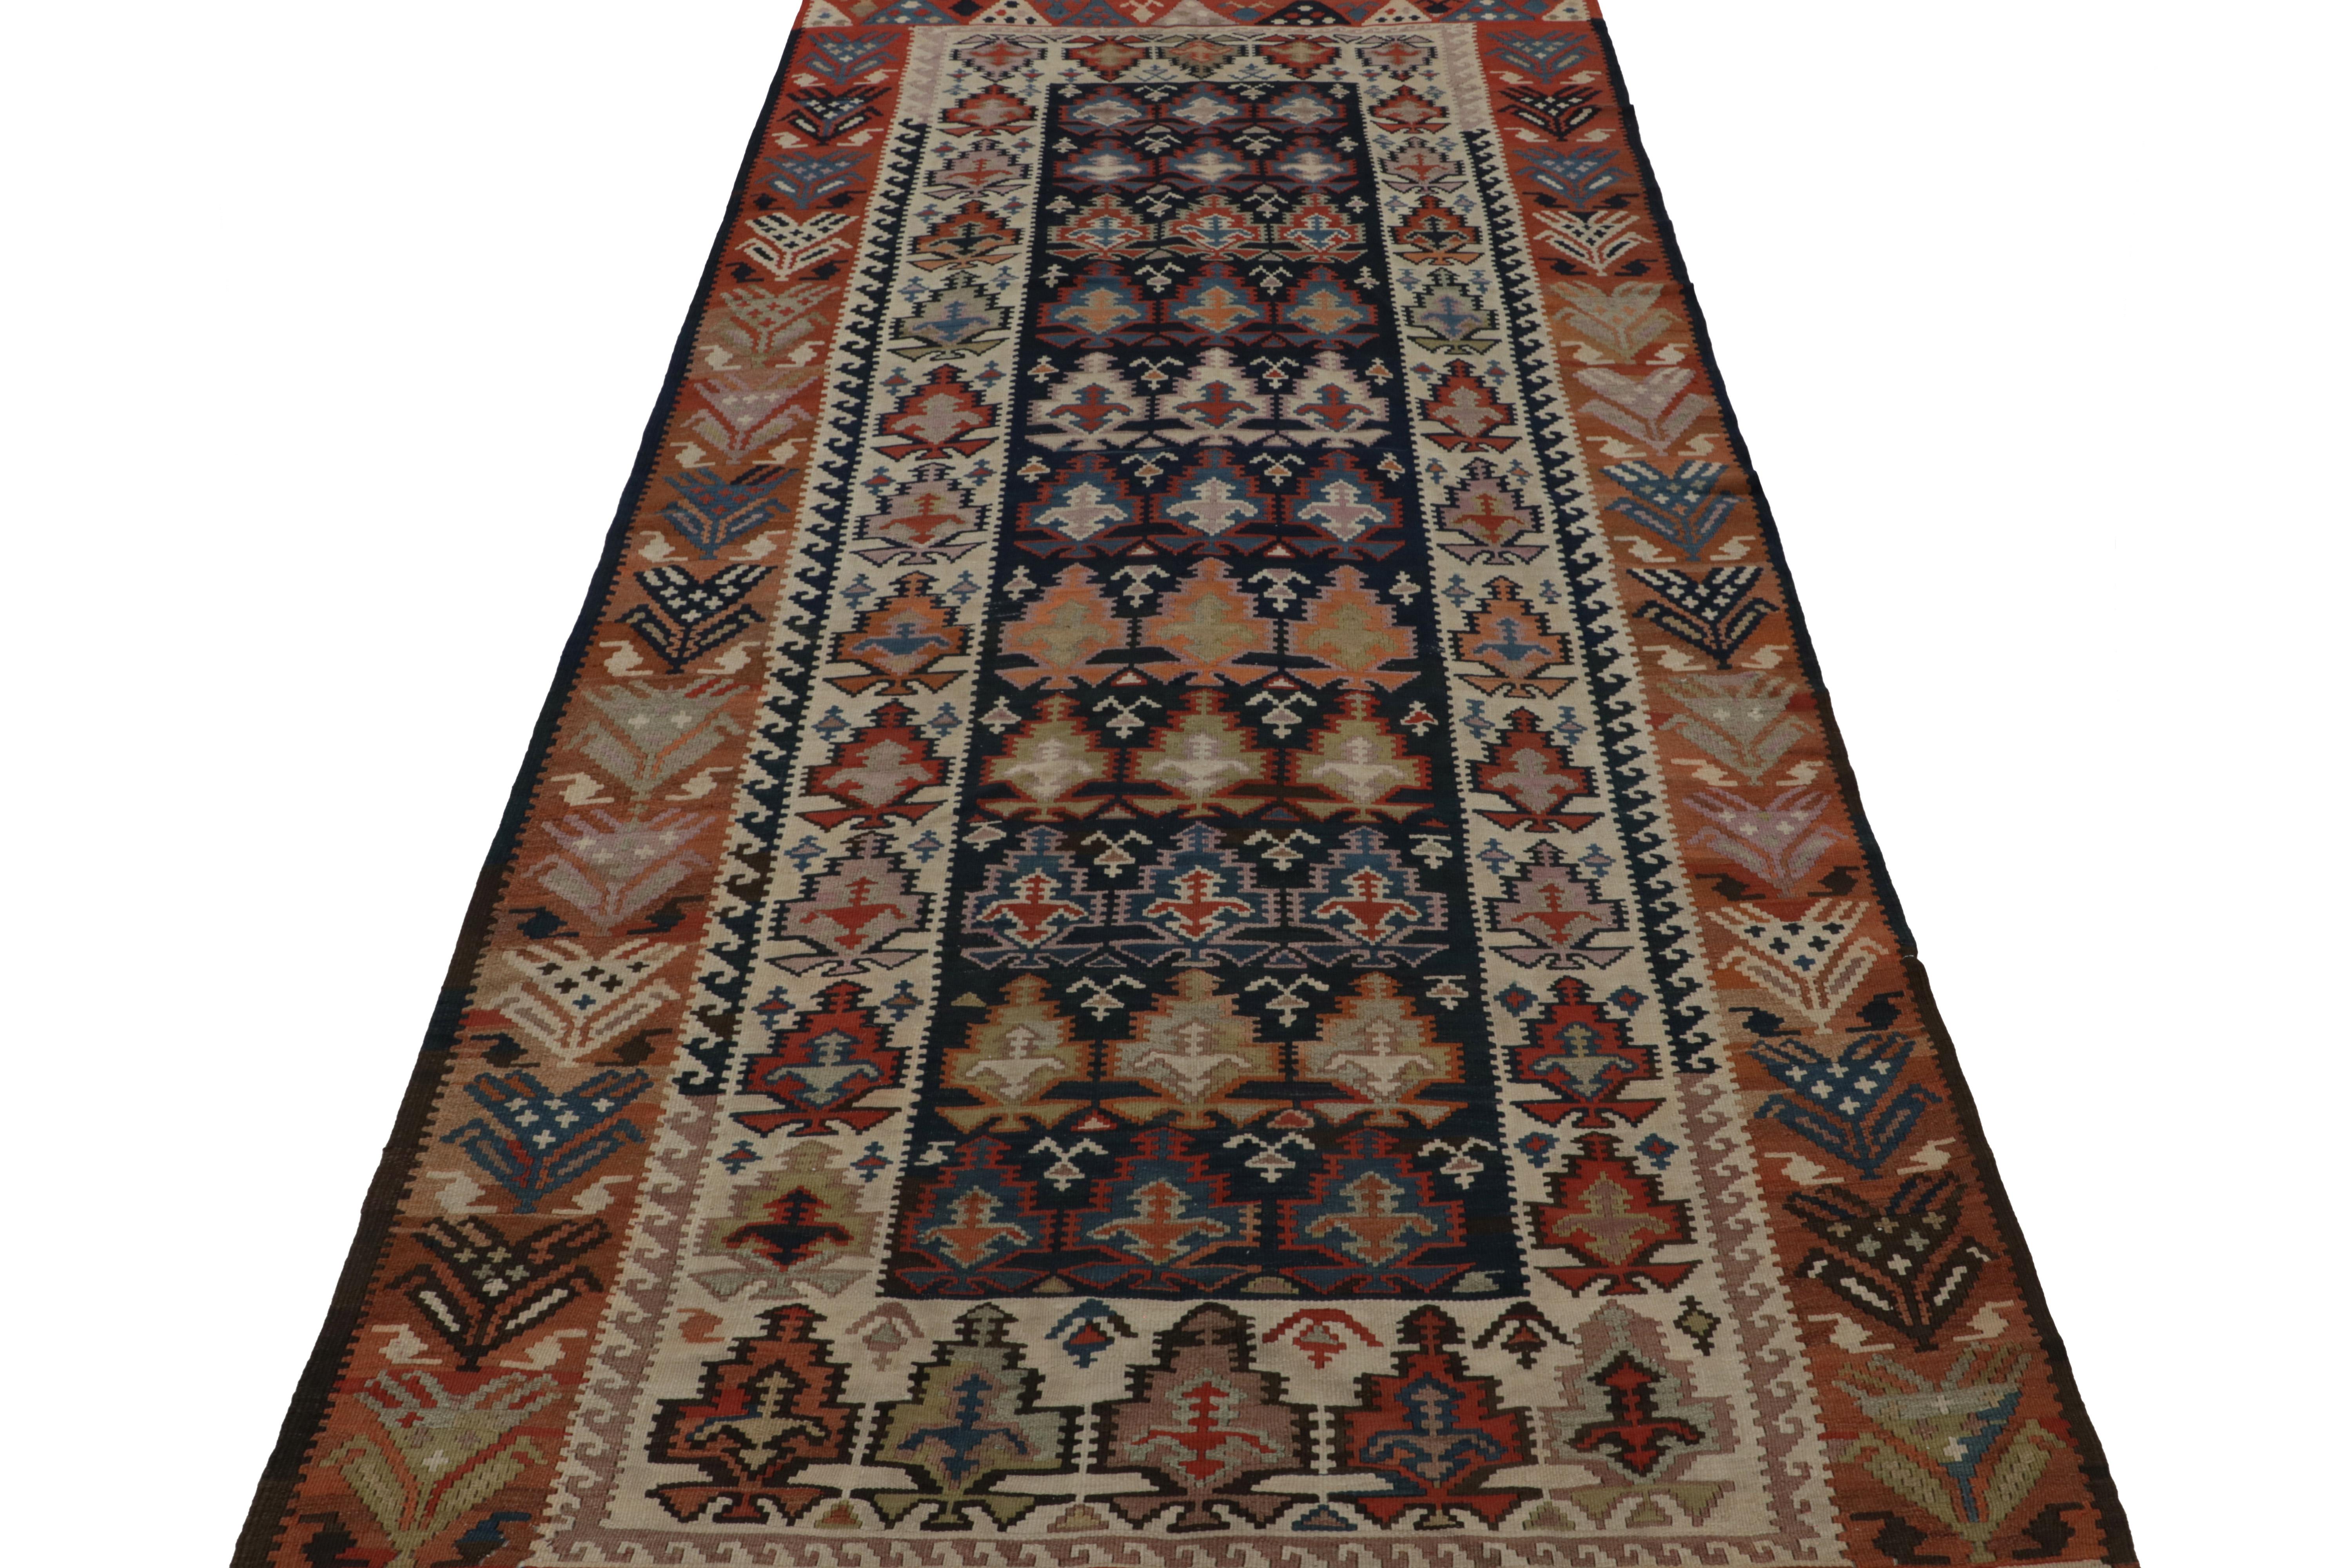 Afghan Vintage Tribal Kilim in Blue-Brown Geometric Patterns, from Rug & Kilim For Sale